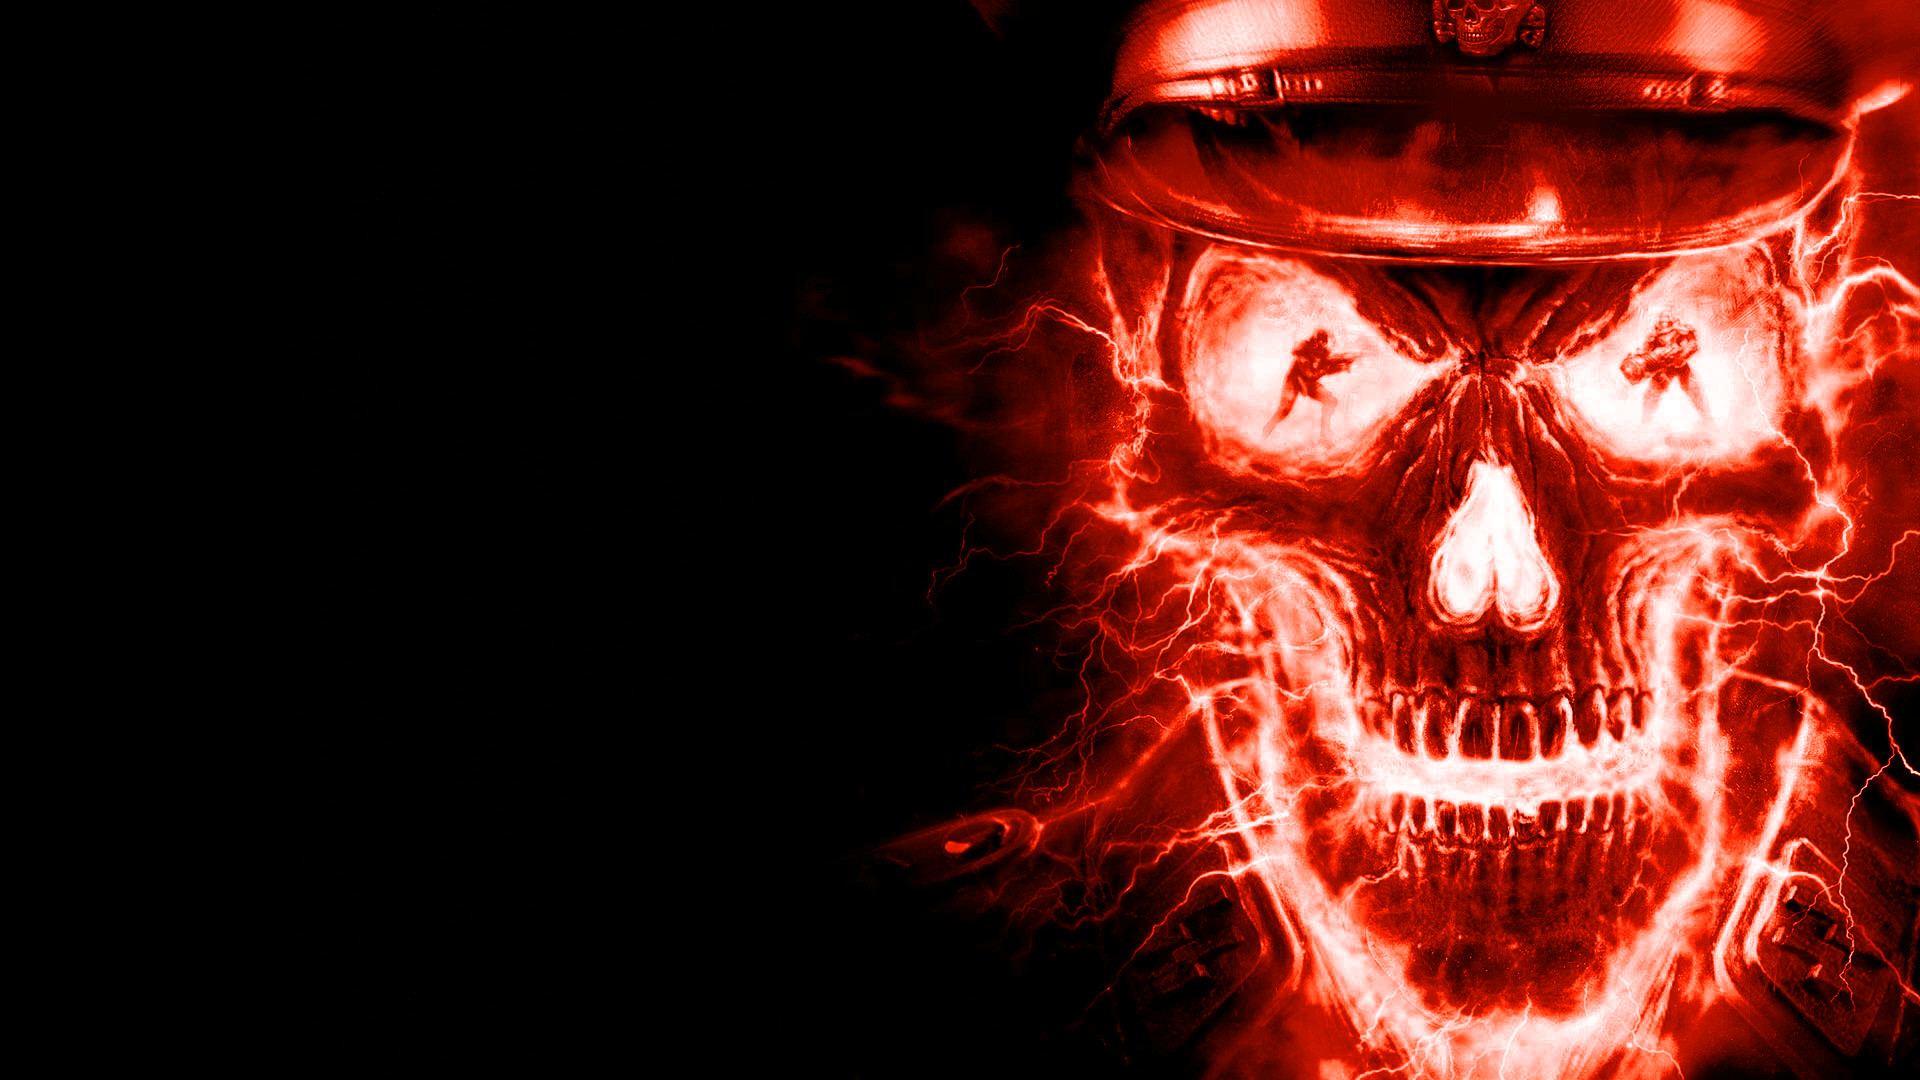 Red Skulls On Fire Photo, fire skull texture